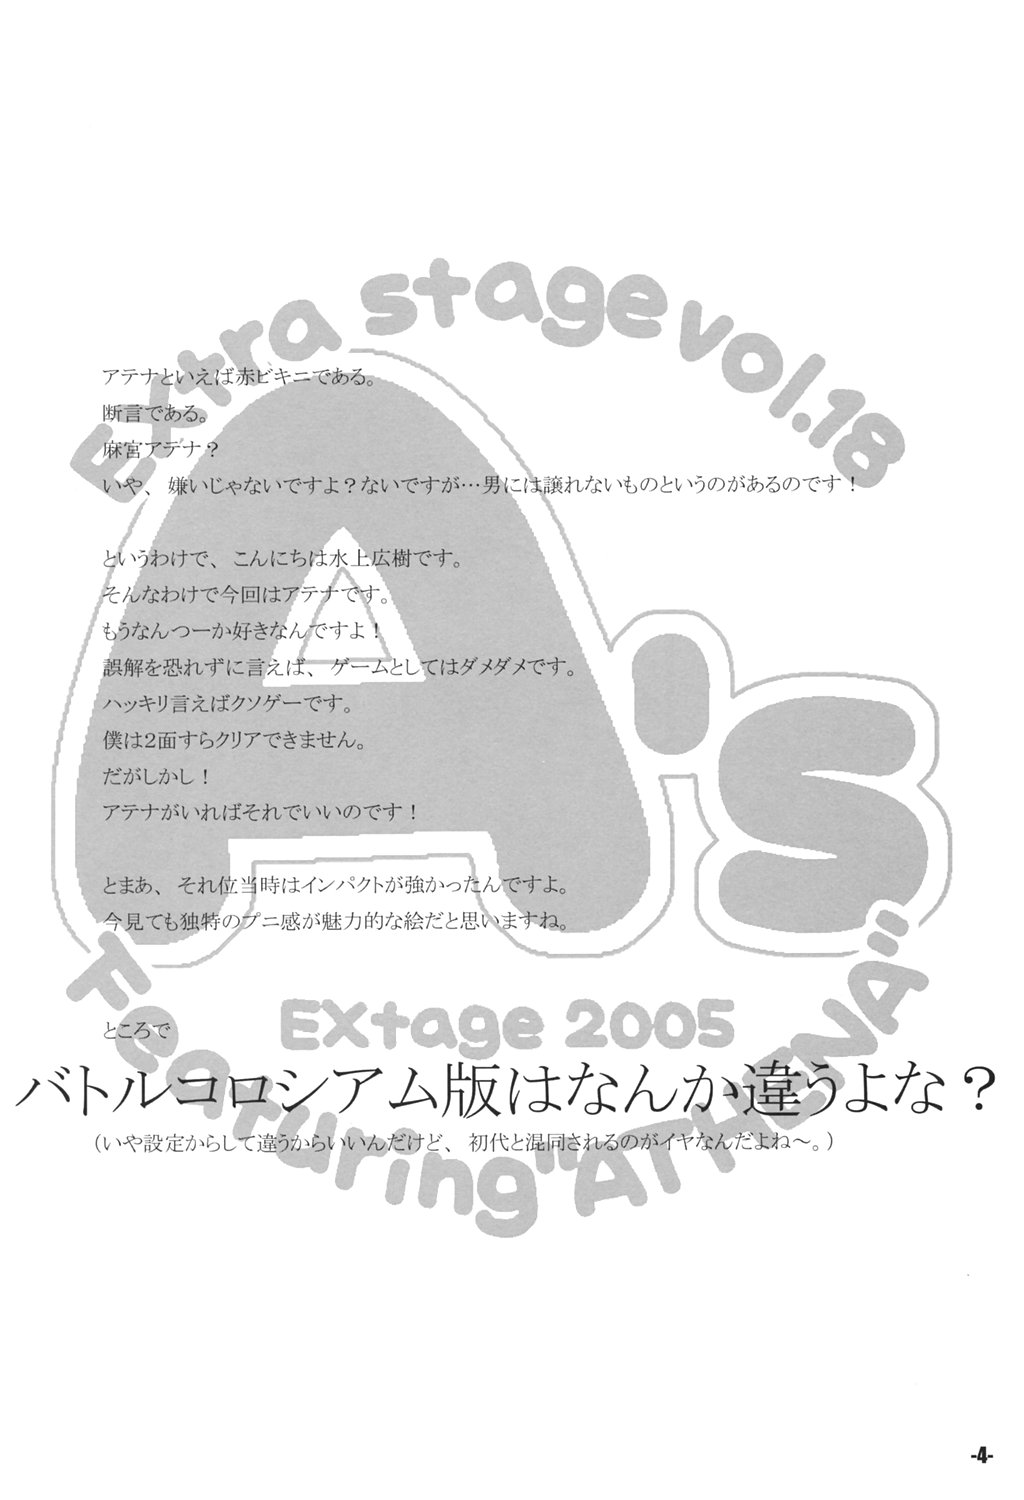 [EXtage] - EXtra Stage Vol.18 